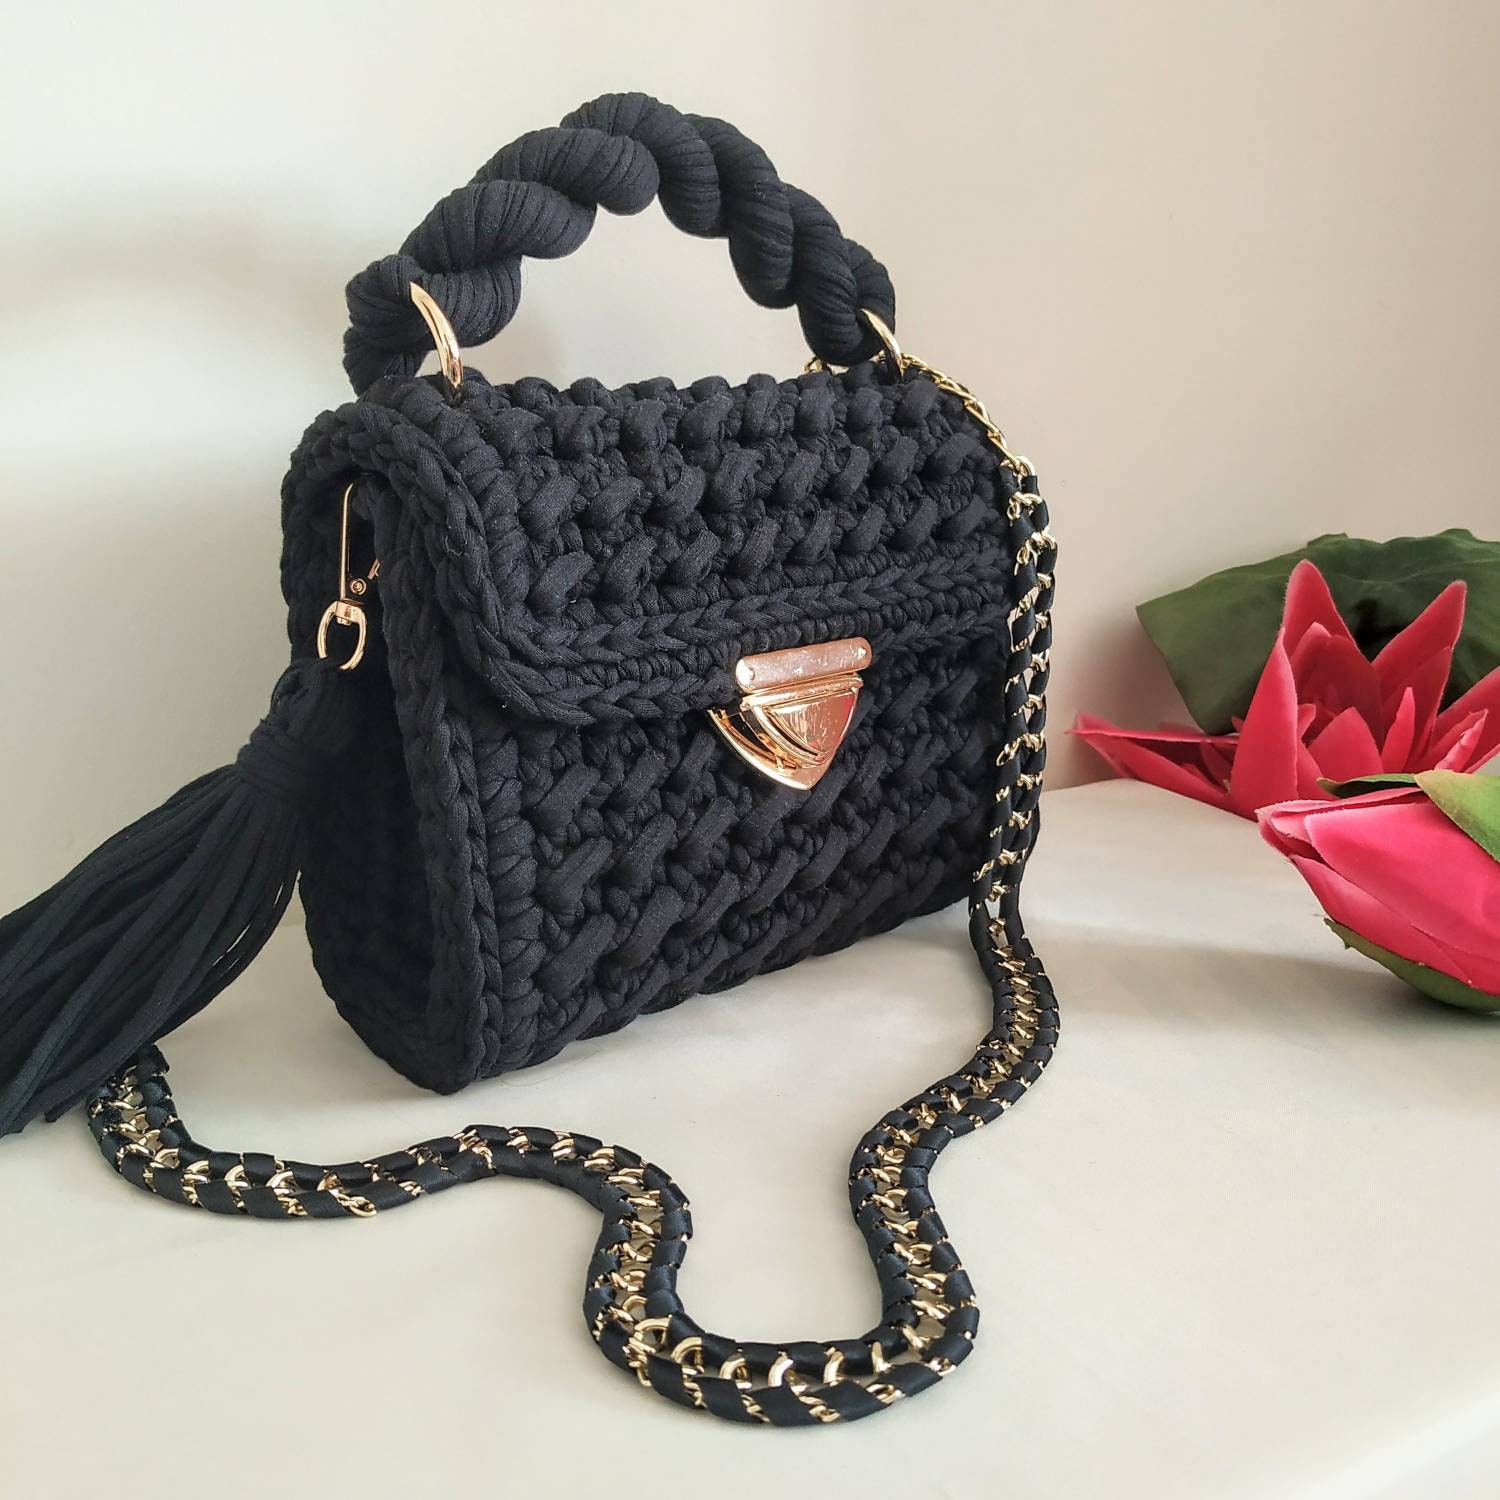 The Sak | Bags | The Sak Black Crochet Purse | Poshmark